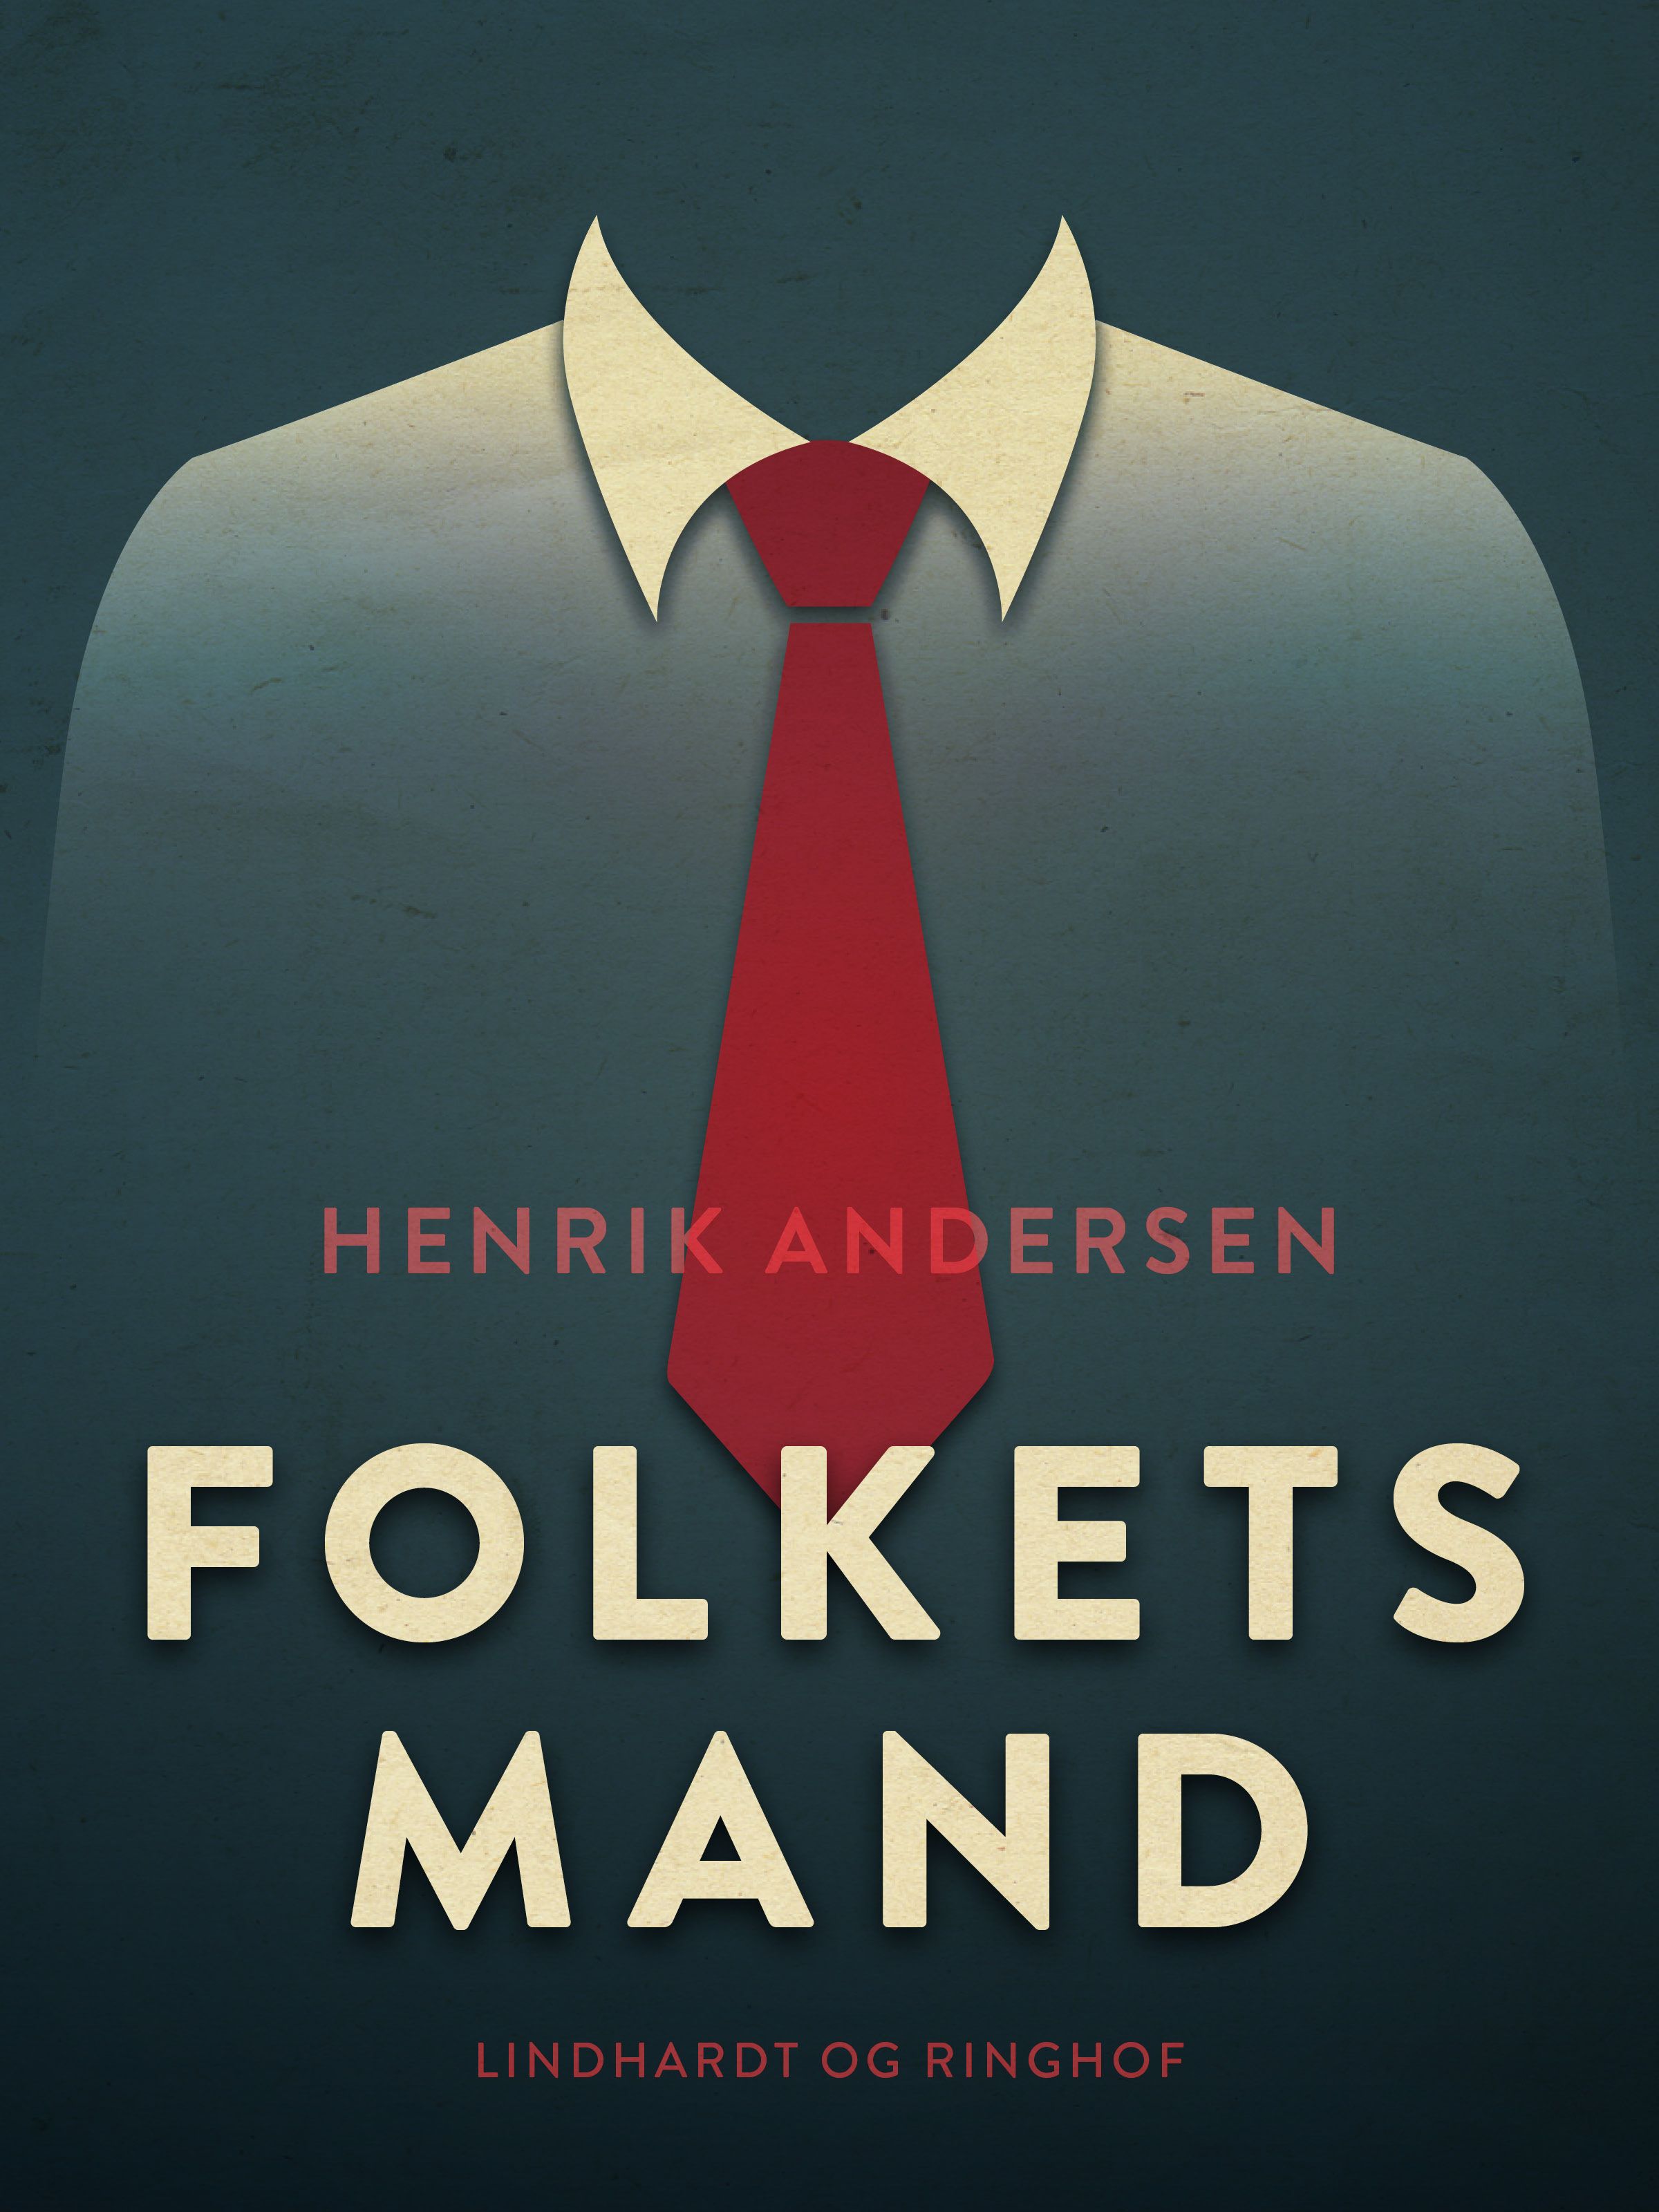 Folkets mand, eBook by Henrik Andersen